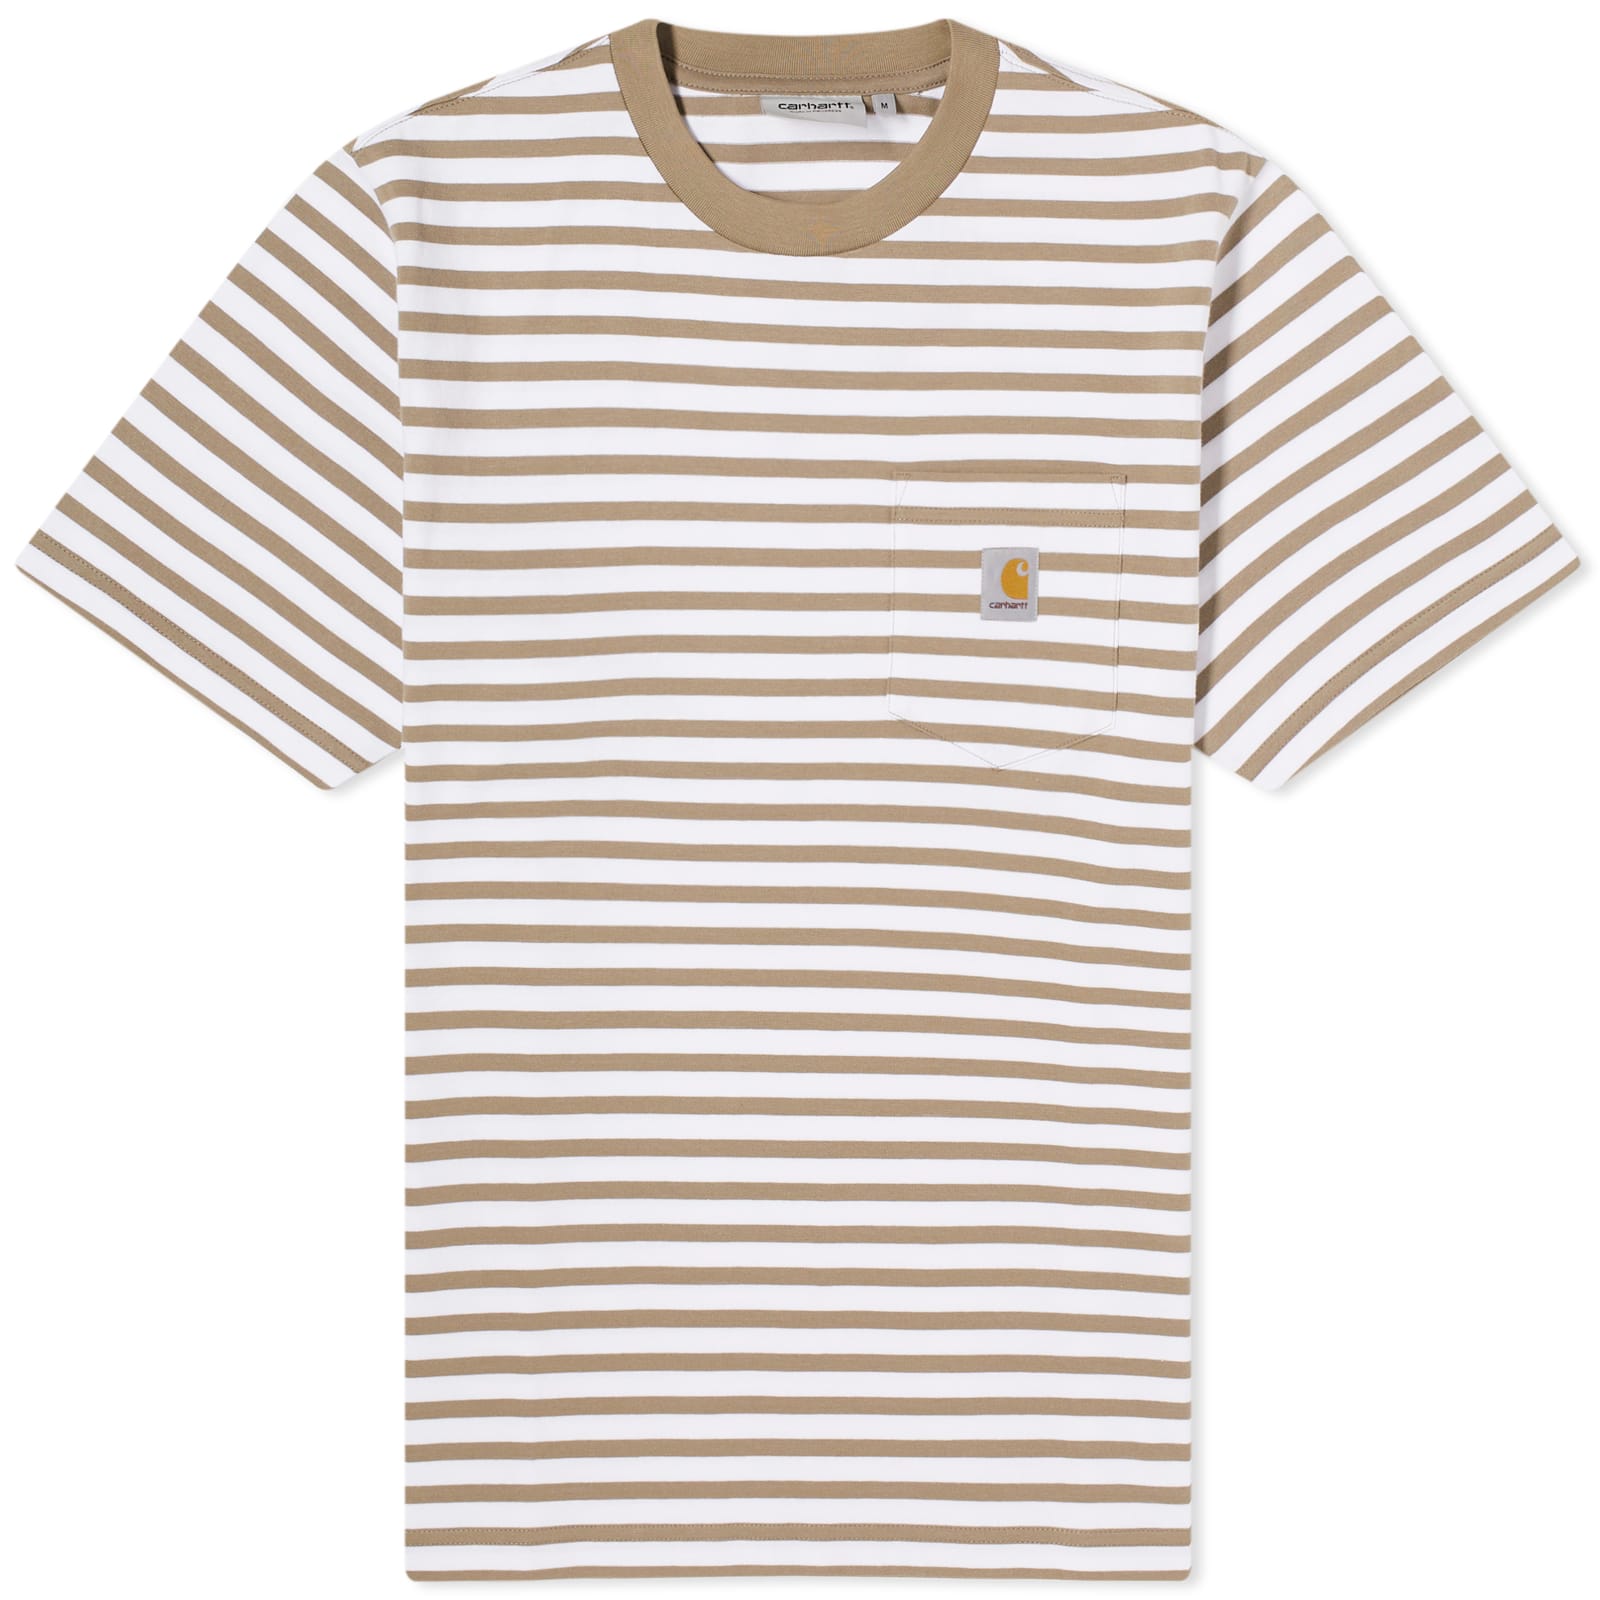 Футболка Carhartt Wip Seidler Stripe Pocket, светло-коричневый/белый